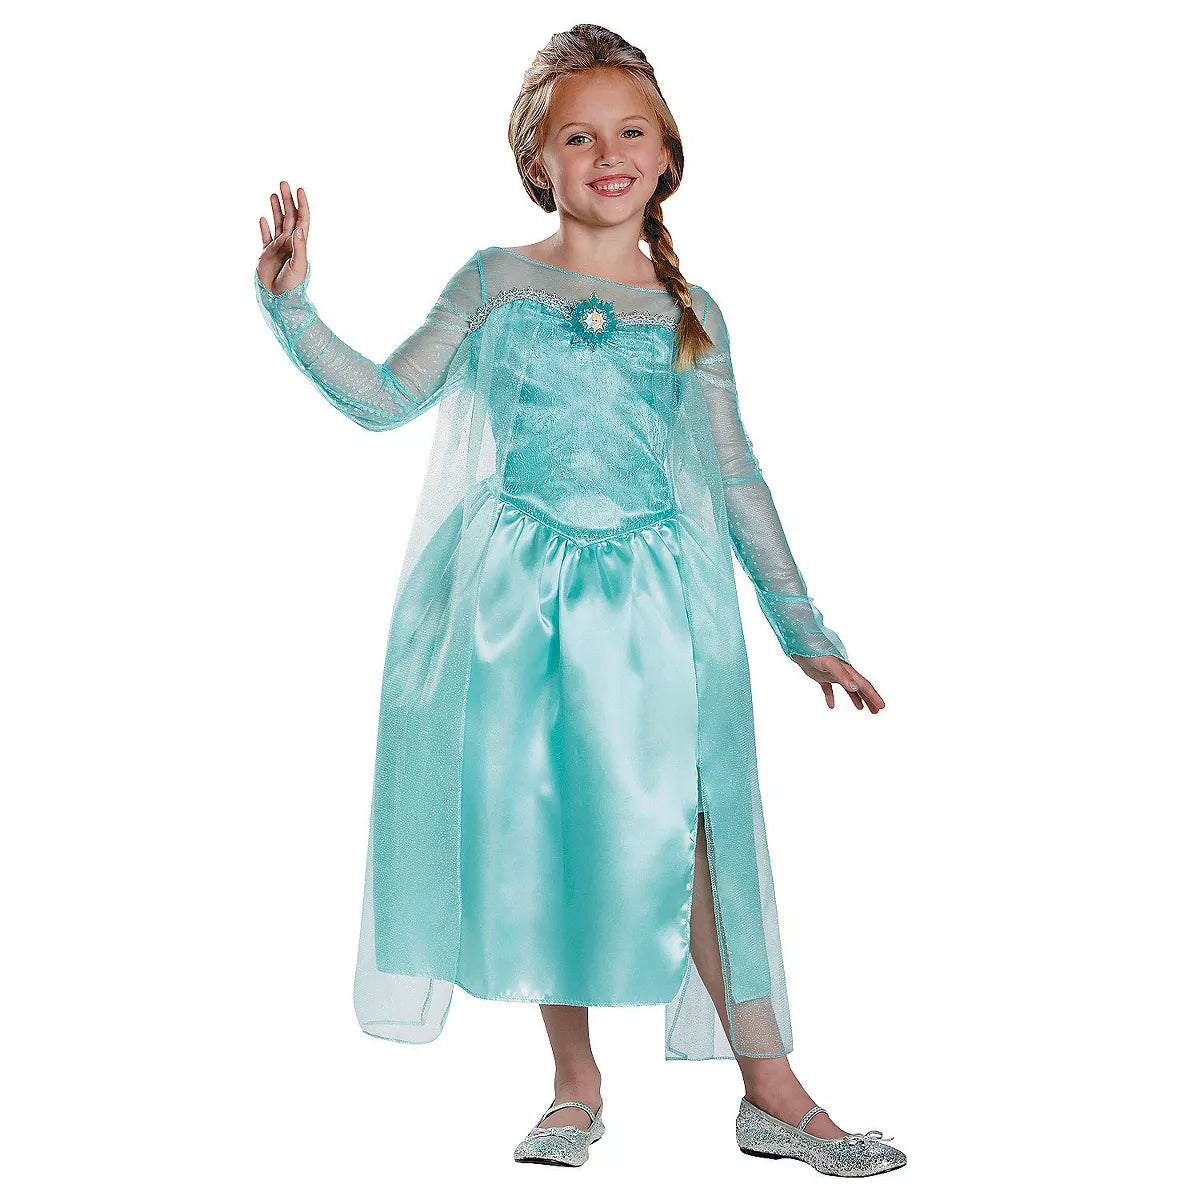 Elsa - Disney Frozen (Child Classic)